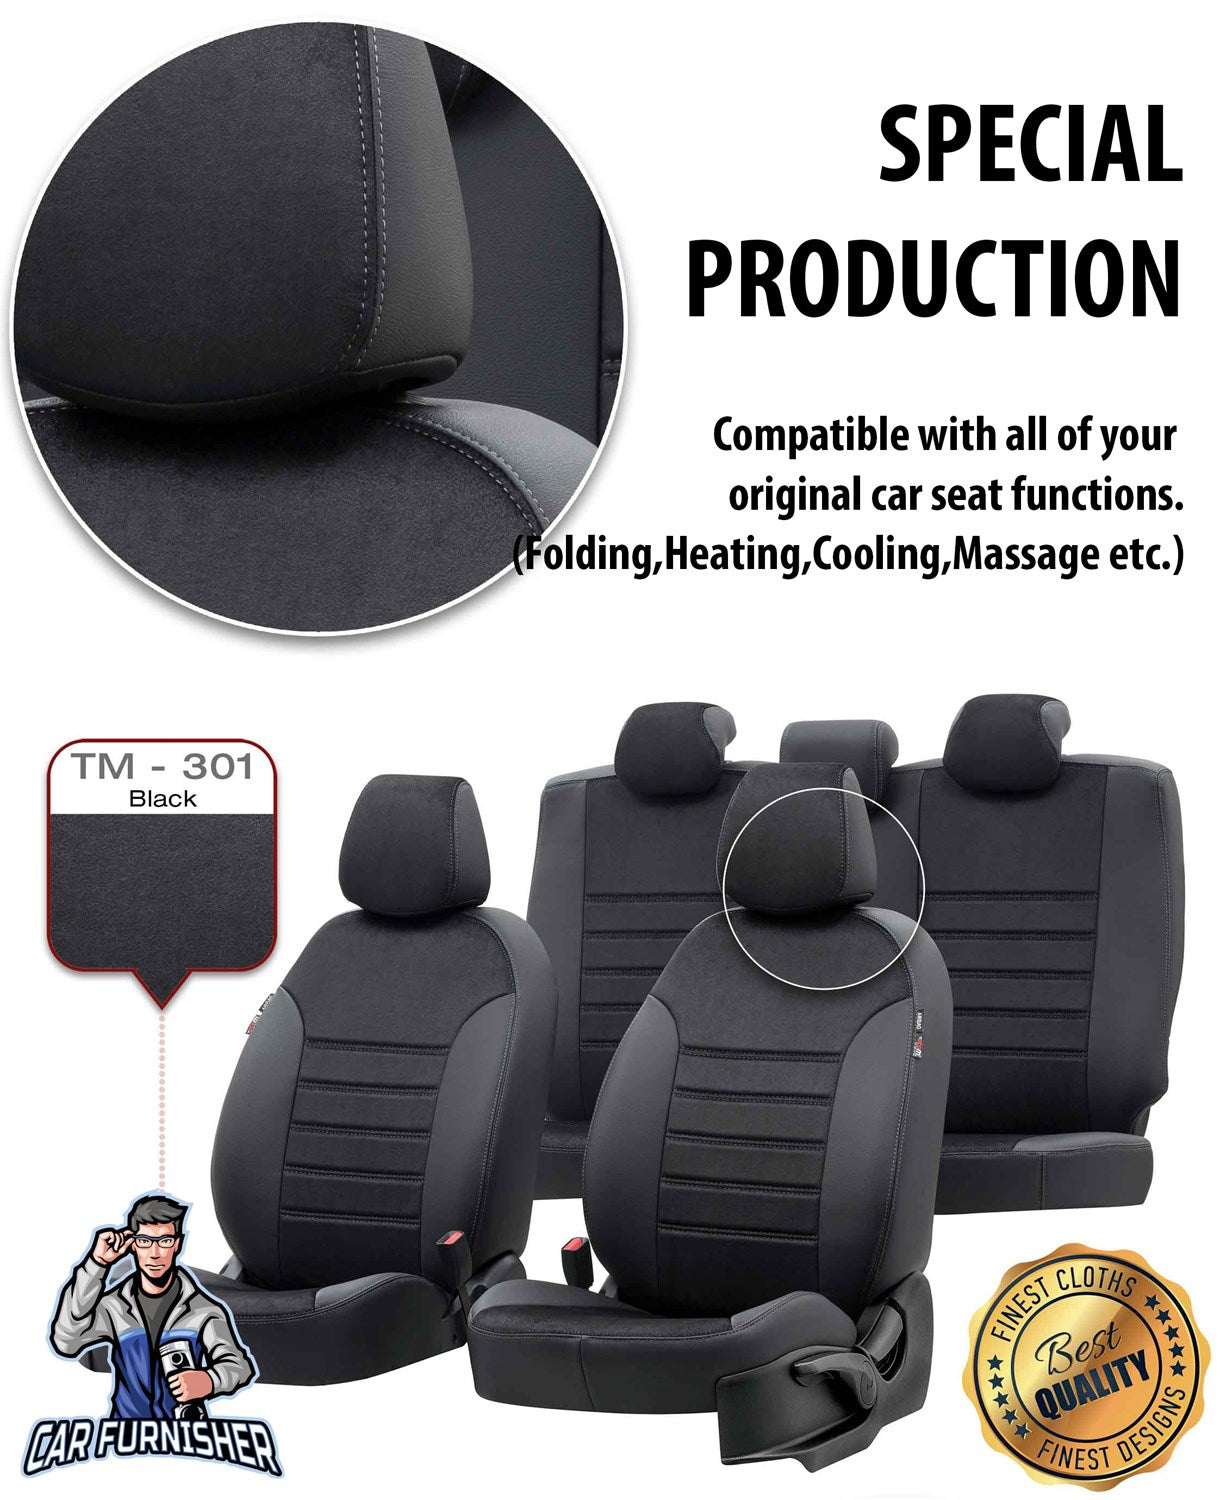 Dfm Succe Seat Covers Milano Suede Design Black Leather & Suede Fabric